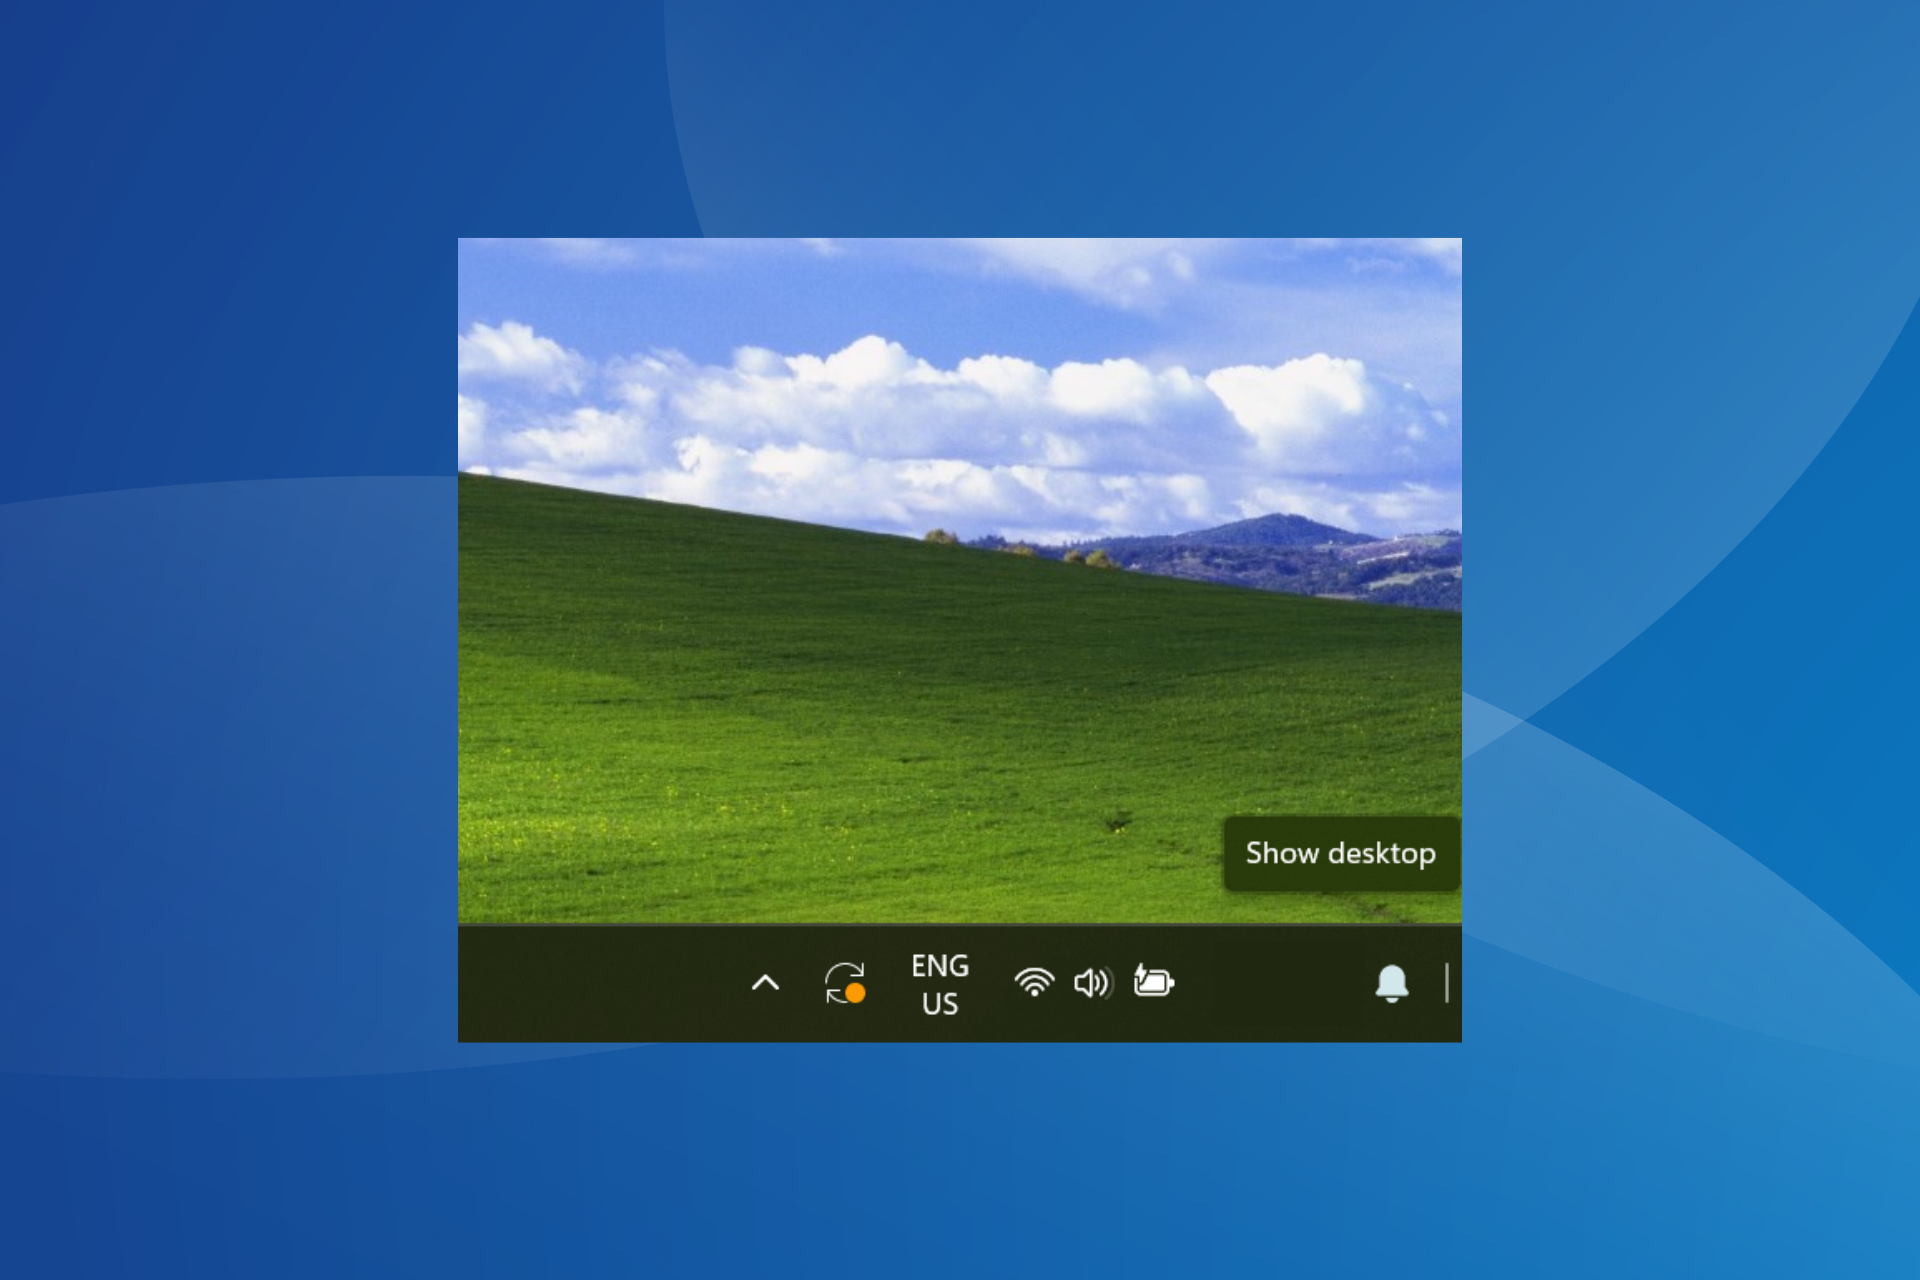 show desktop icon removde from taskbar in Windows 11